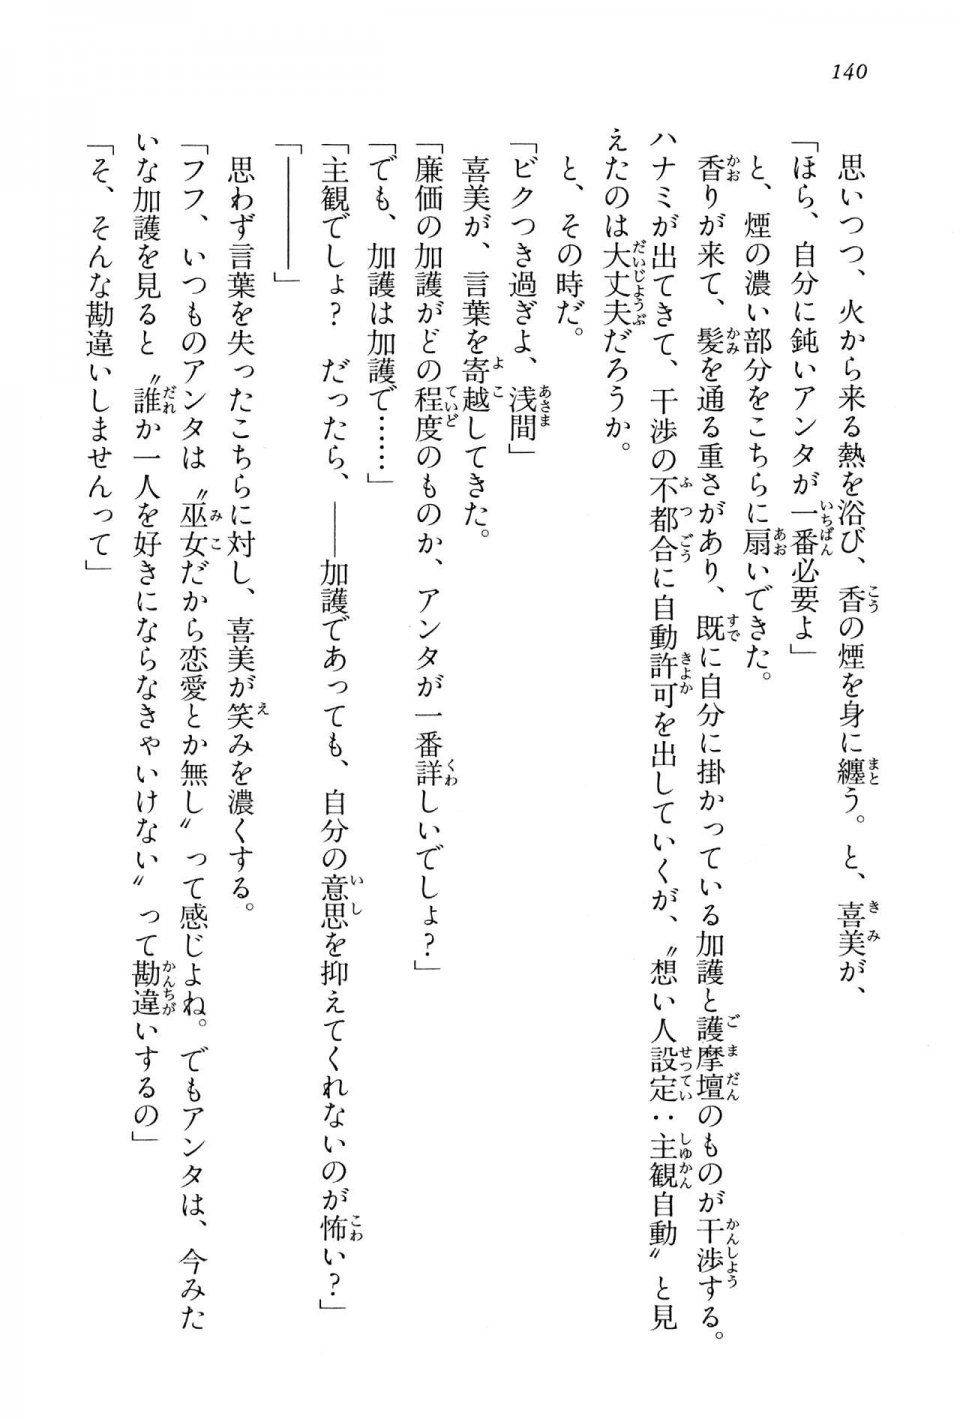 Kyoukai Senjou no Horizon BD Special Mininovel Vol 2(1B) - Photo #144